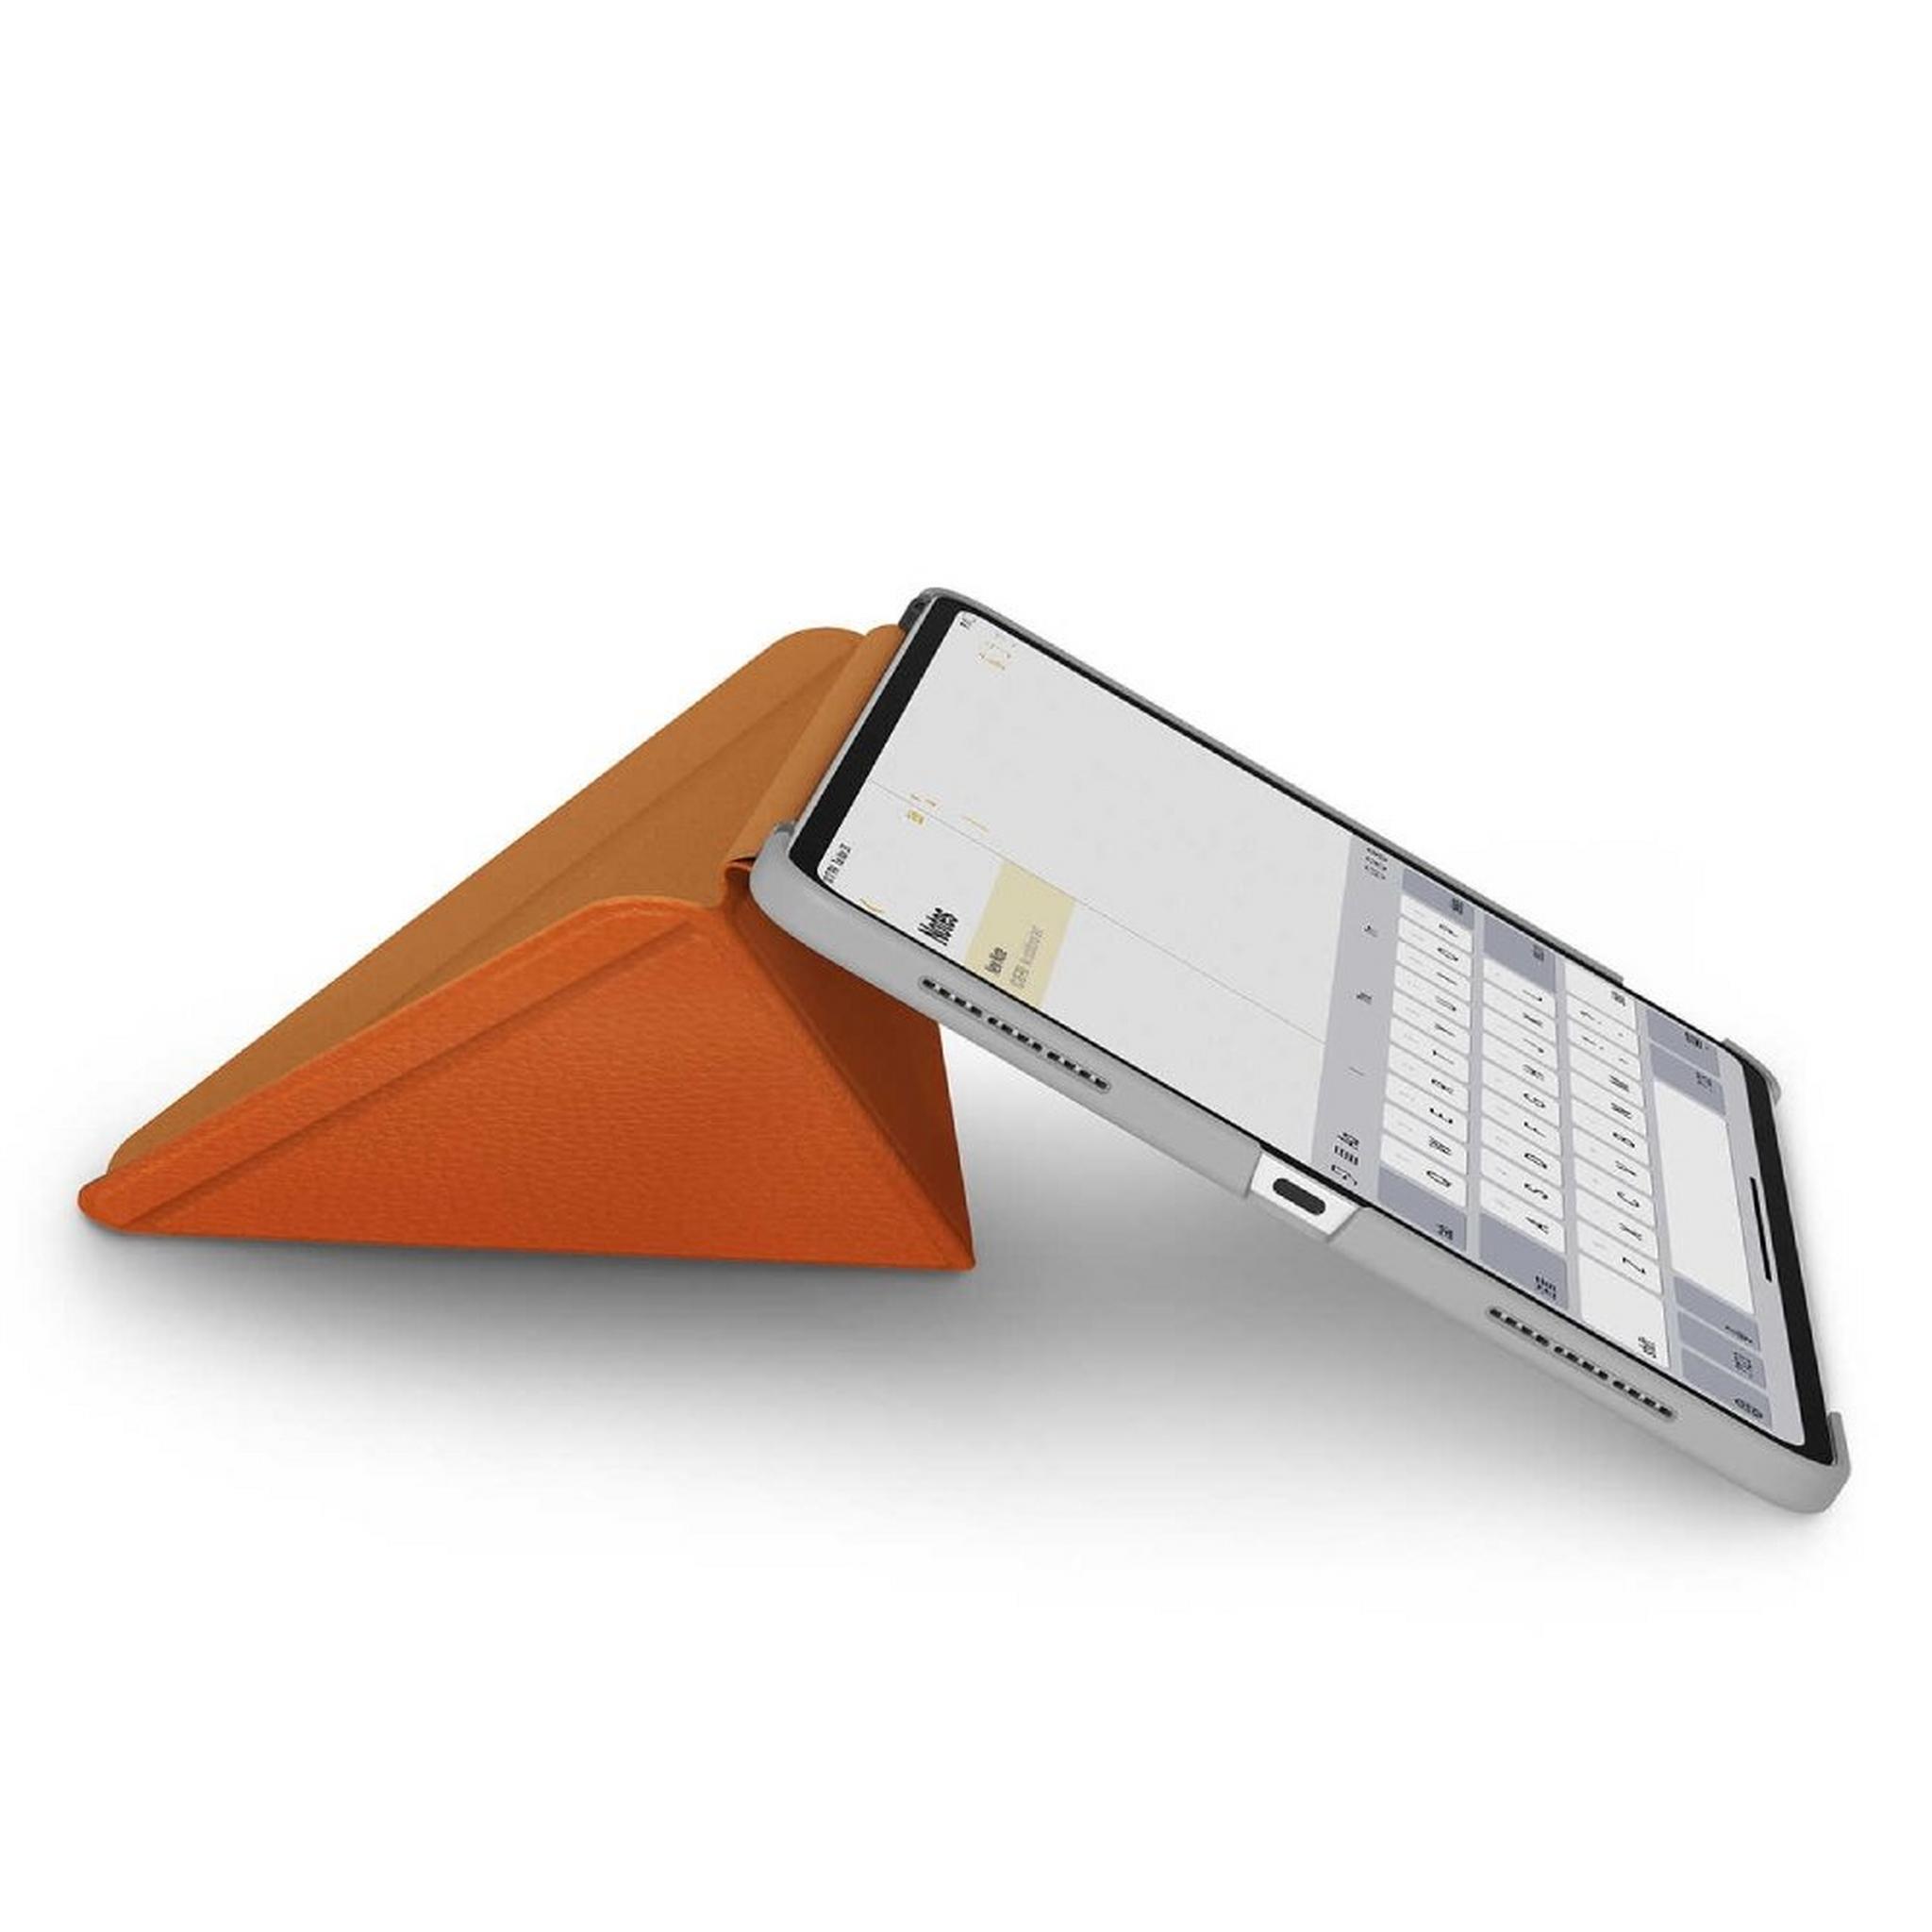 Moshi Versa Case For iPad Air 10.9-inch & iPad Pro 11-inch - Orange